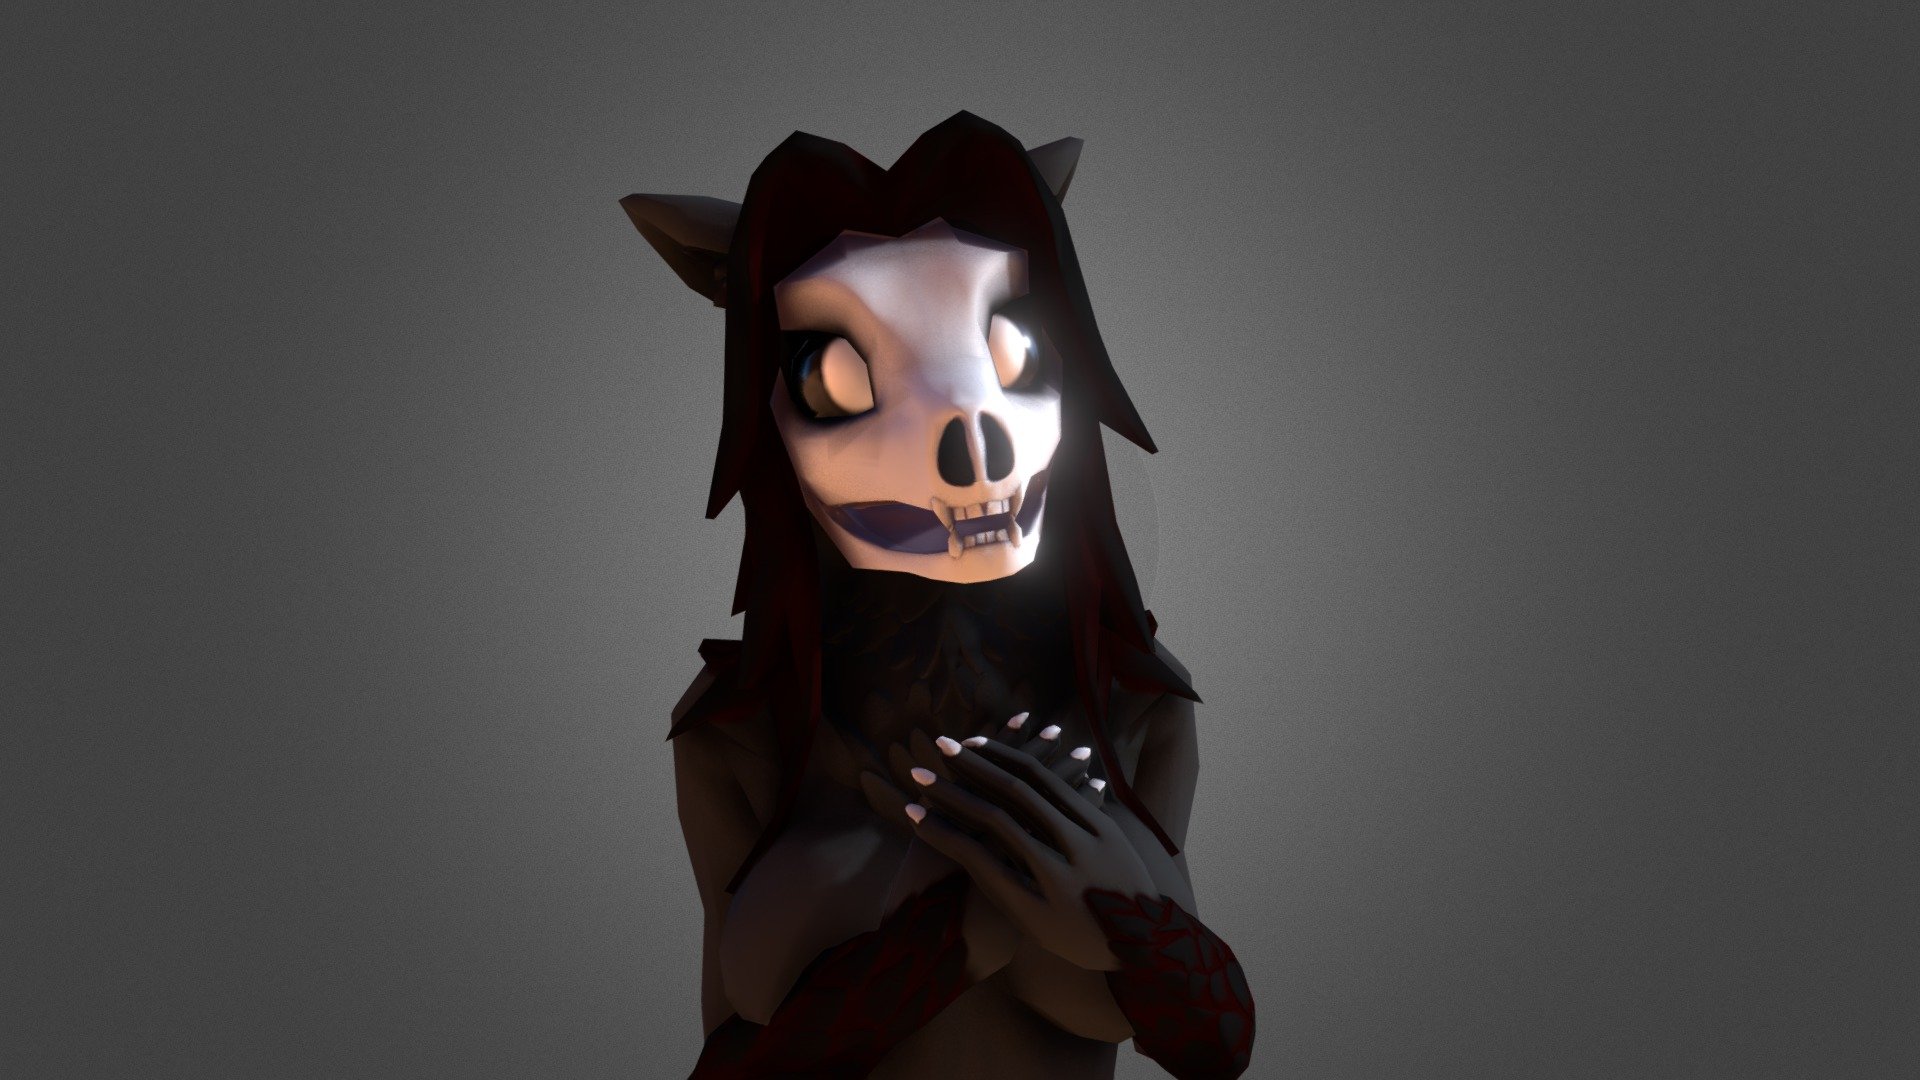 Skull Furry Model Download Free 3d Model By Vesper 3d Damkung13